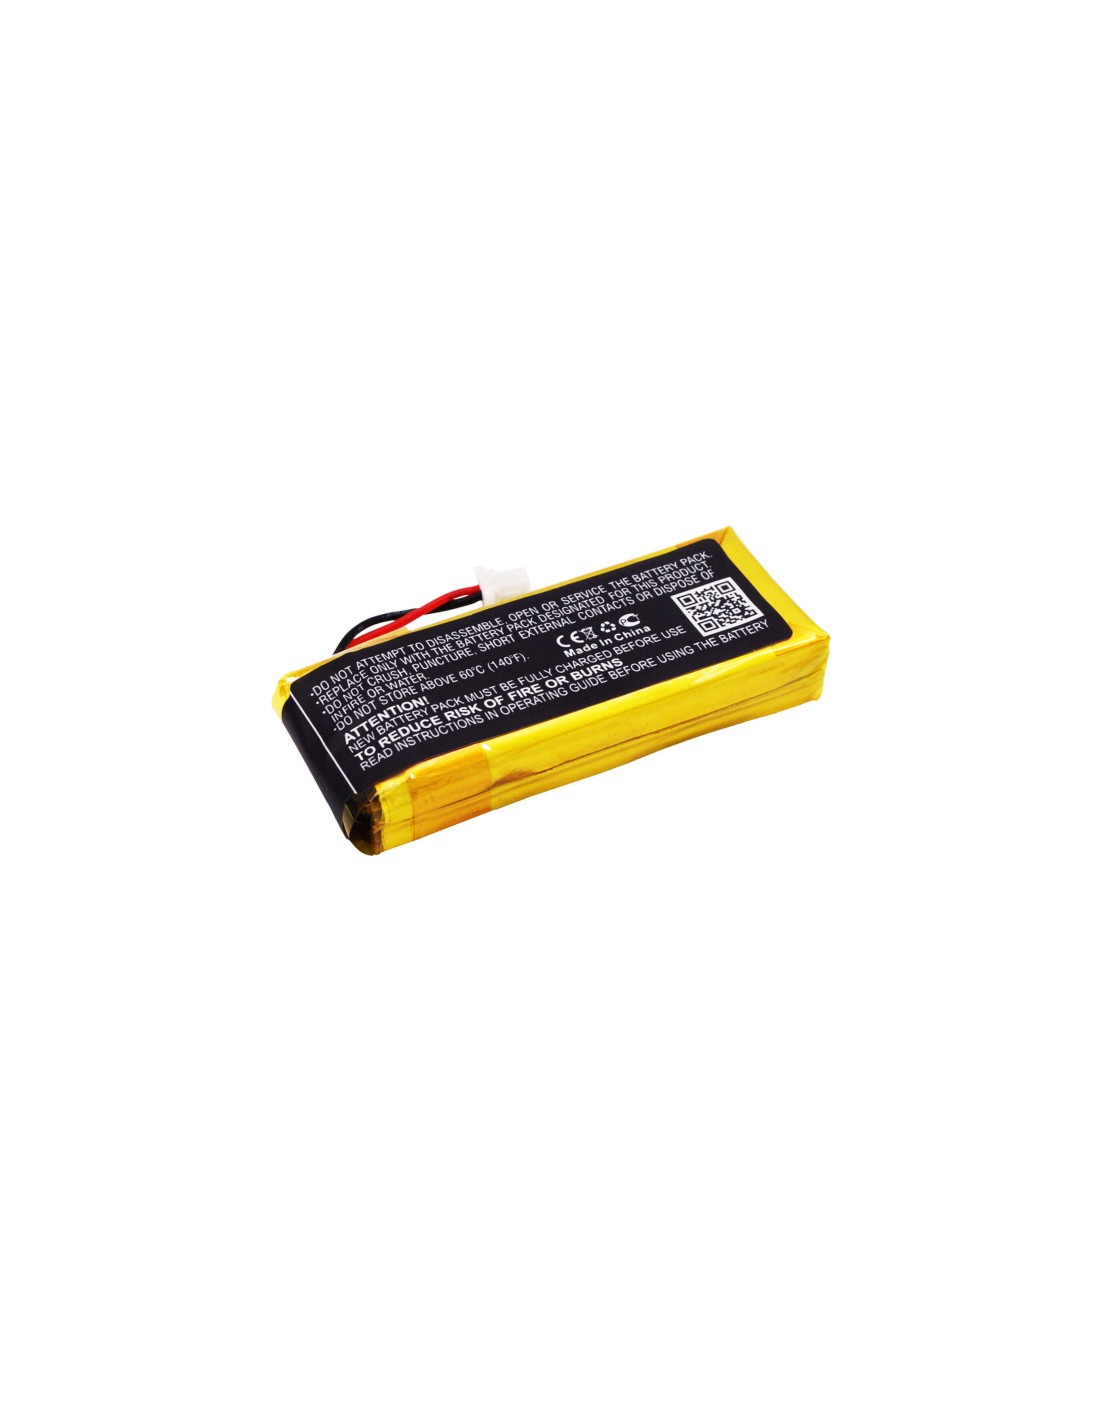 Battery for Cardo Scala Rider G4, G9, G9x 800mAh - 2.96Wh